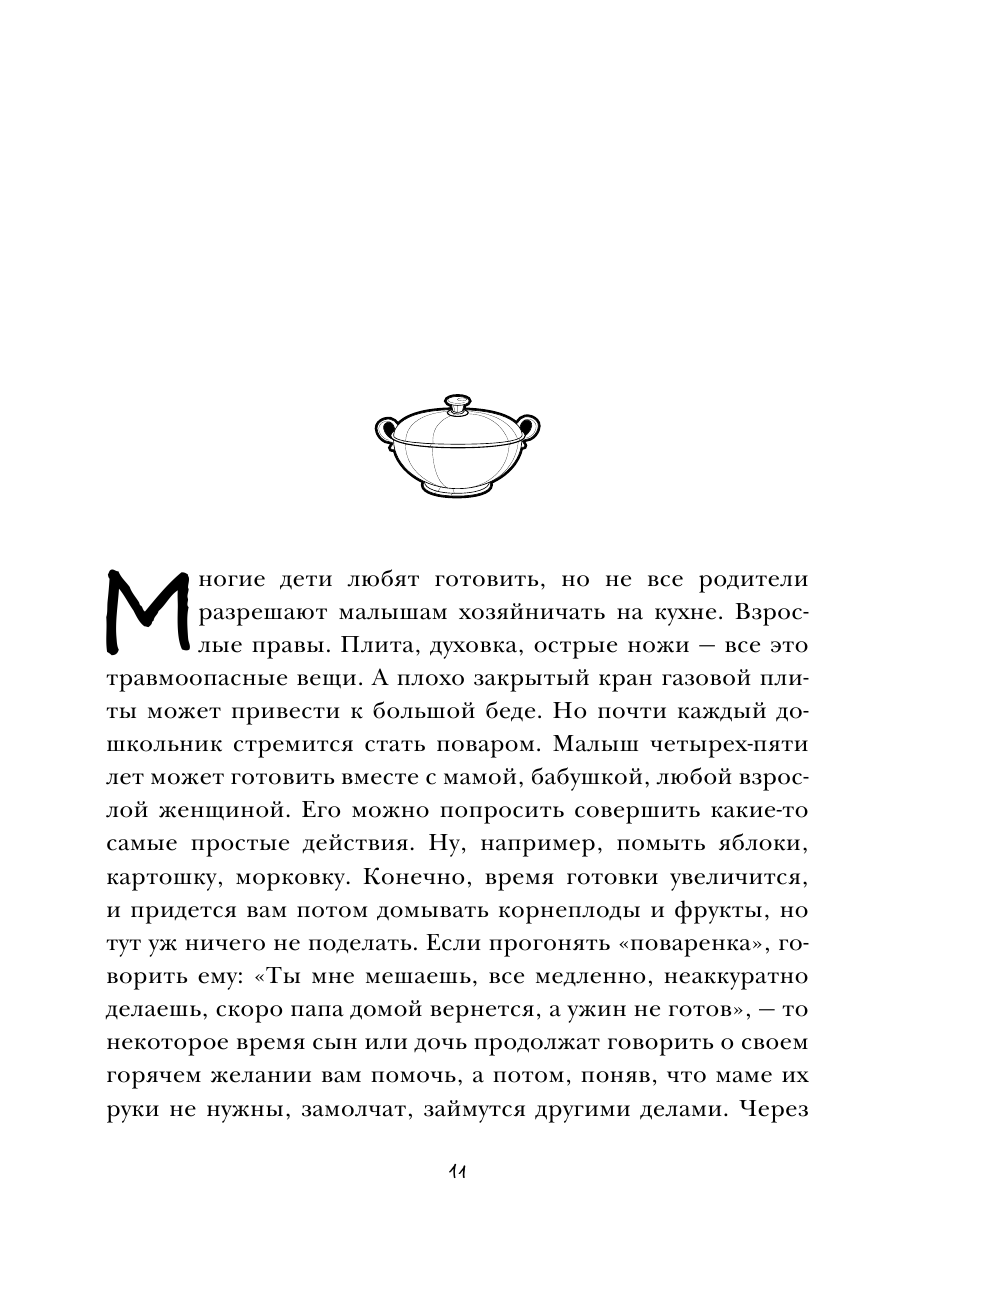 Кулинарная книга лентяйки. Юбилейное издание с новыми рецептами - фото №14